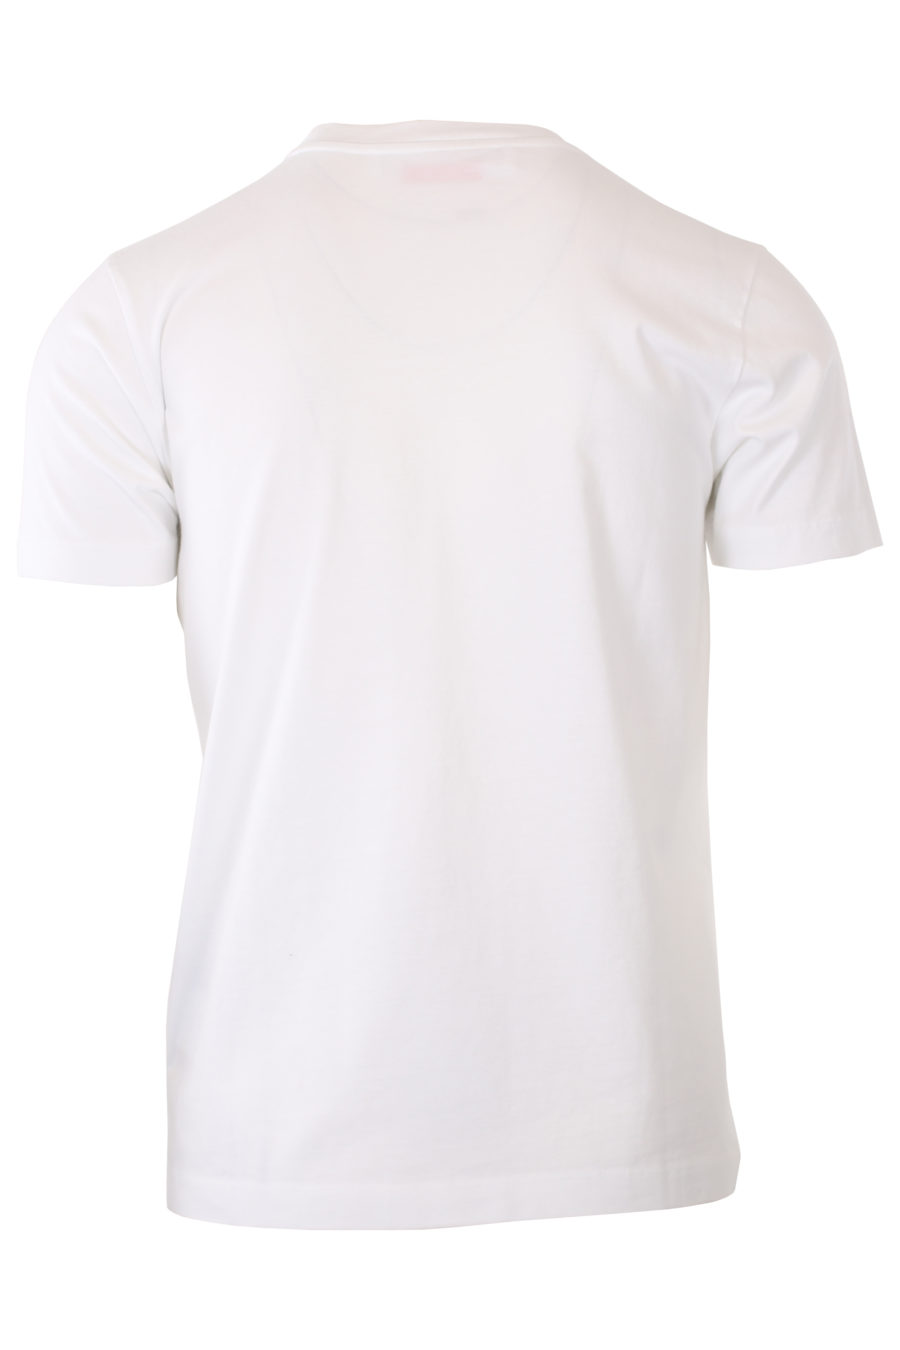 Camiseta blanca con logo pequeño en negro - IMG 2341